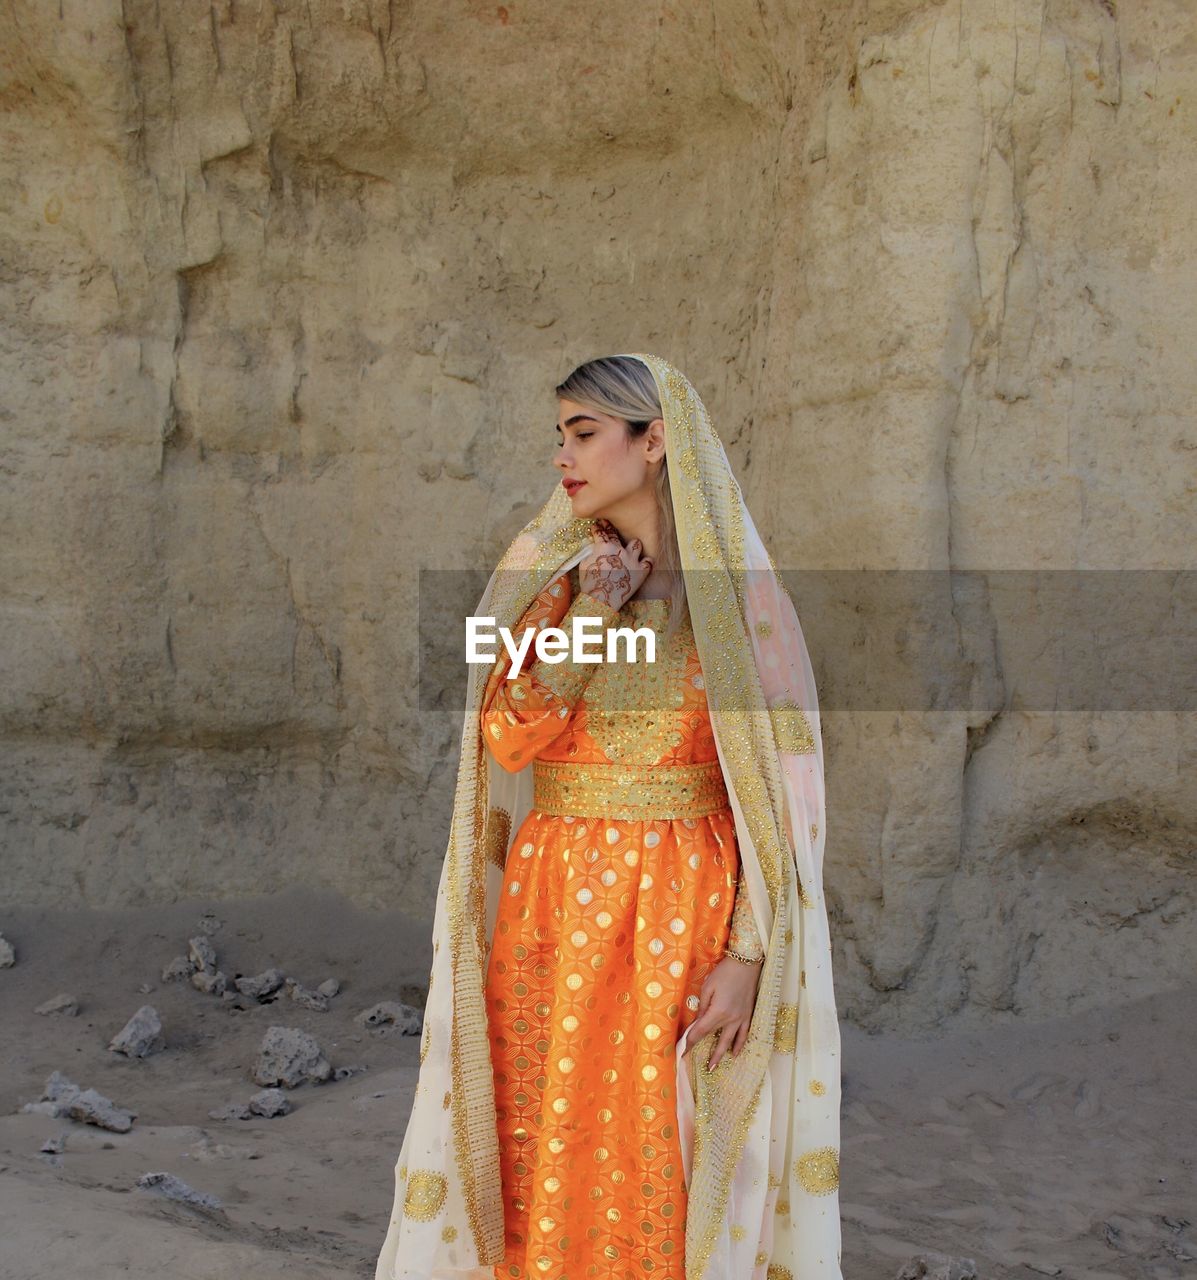 Traditional clothes in qeshm, the beautiful island in iran